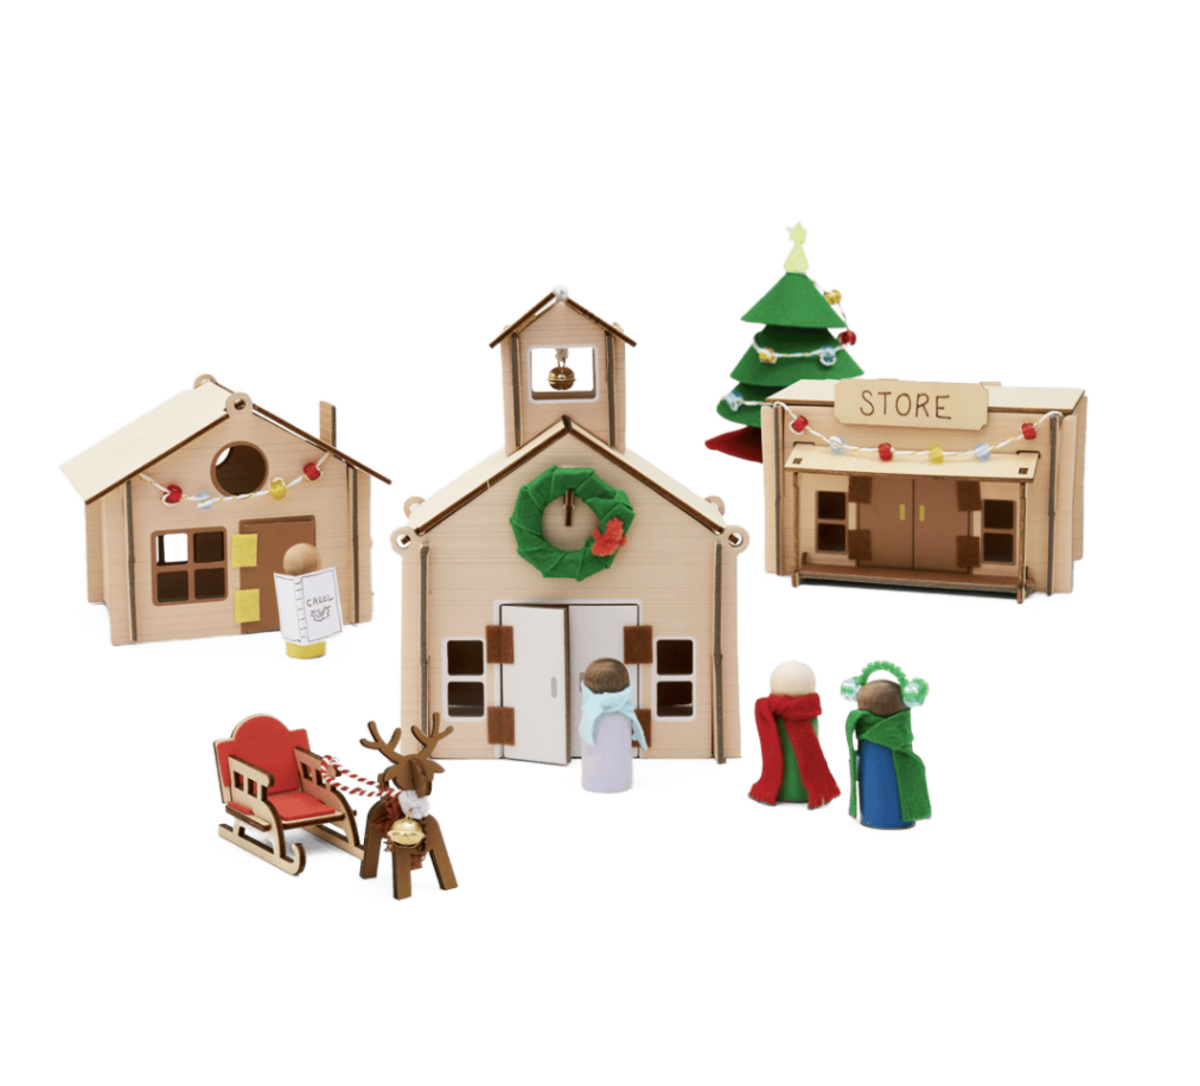 Well Played: Google introduces Santa's Village advent calendar